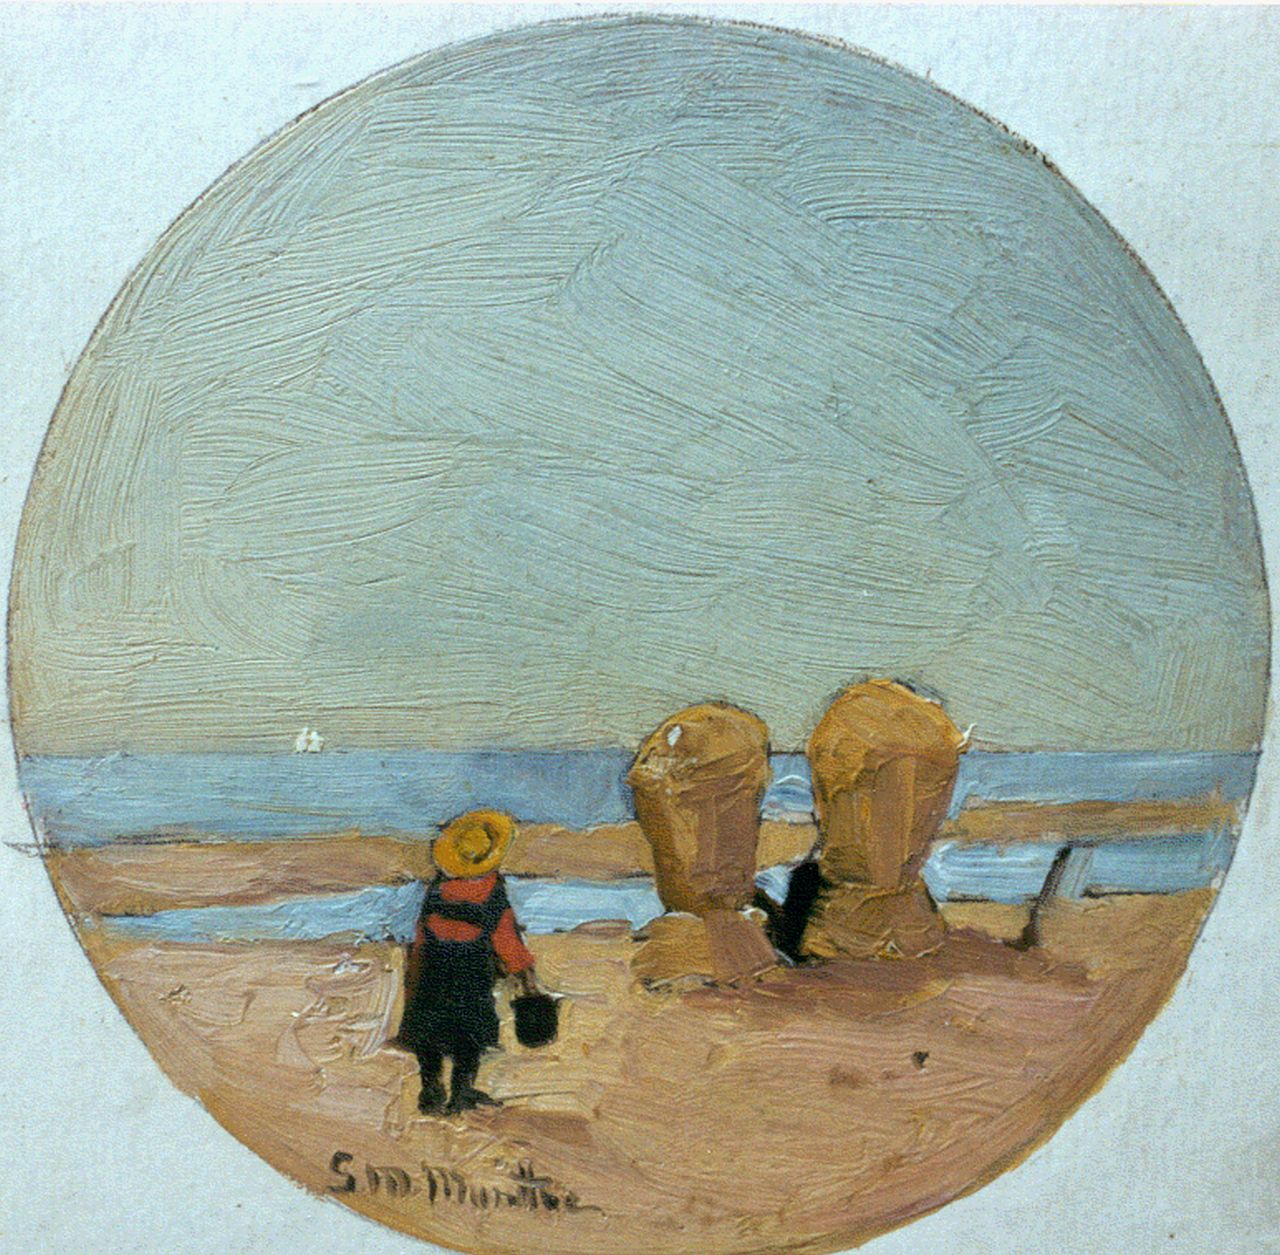 Munthe G.A.L.  | Gerhard Arij Ludwig 'Morgenstjerne' Munthe, Emmertje mee naar de zee, 16,9 x 16,0 cm, gesigneerd linksonder